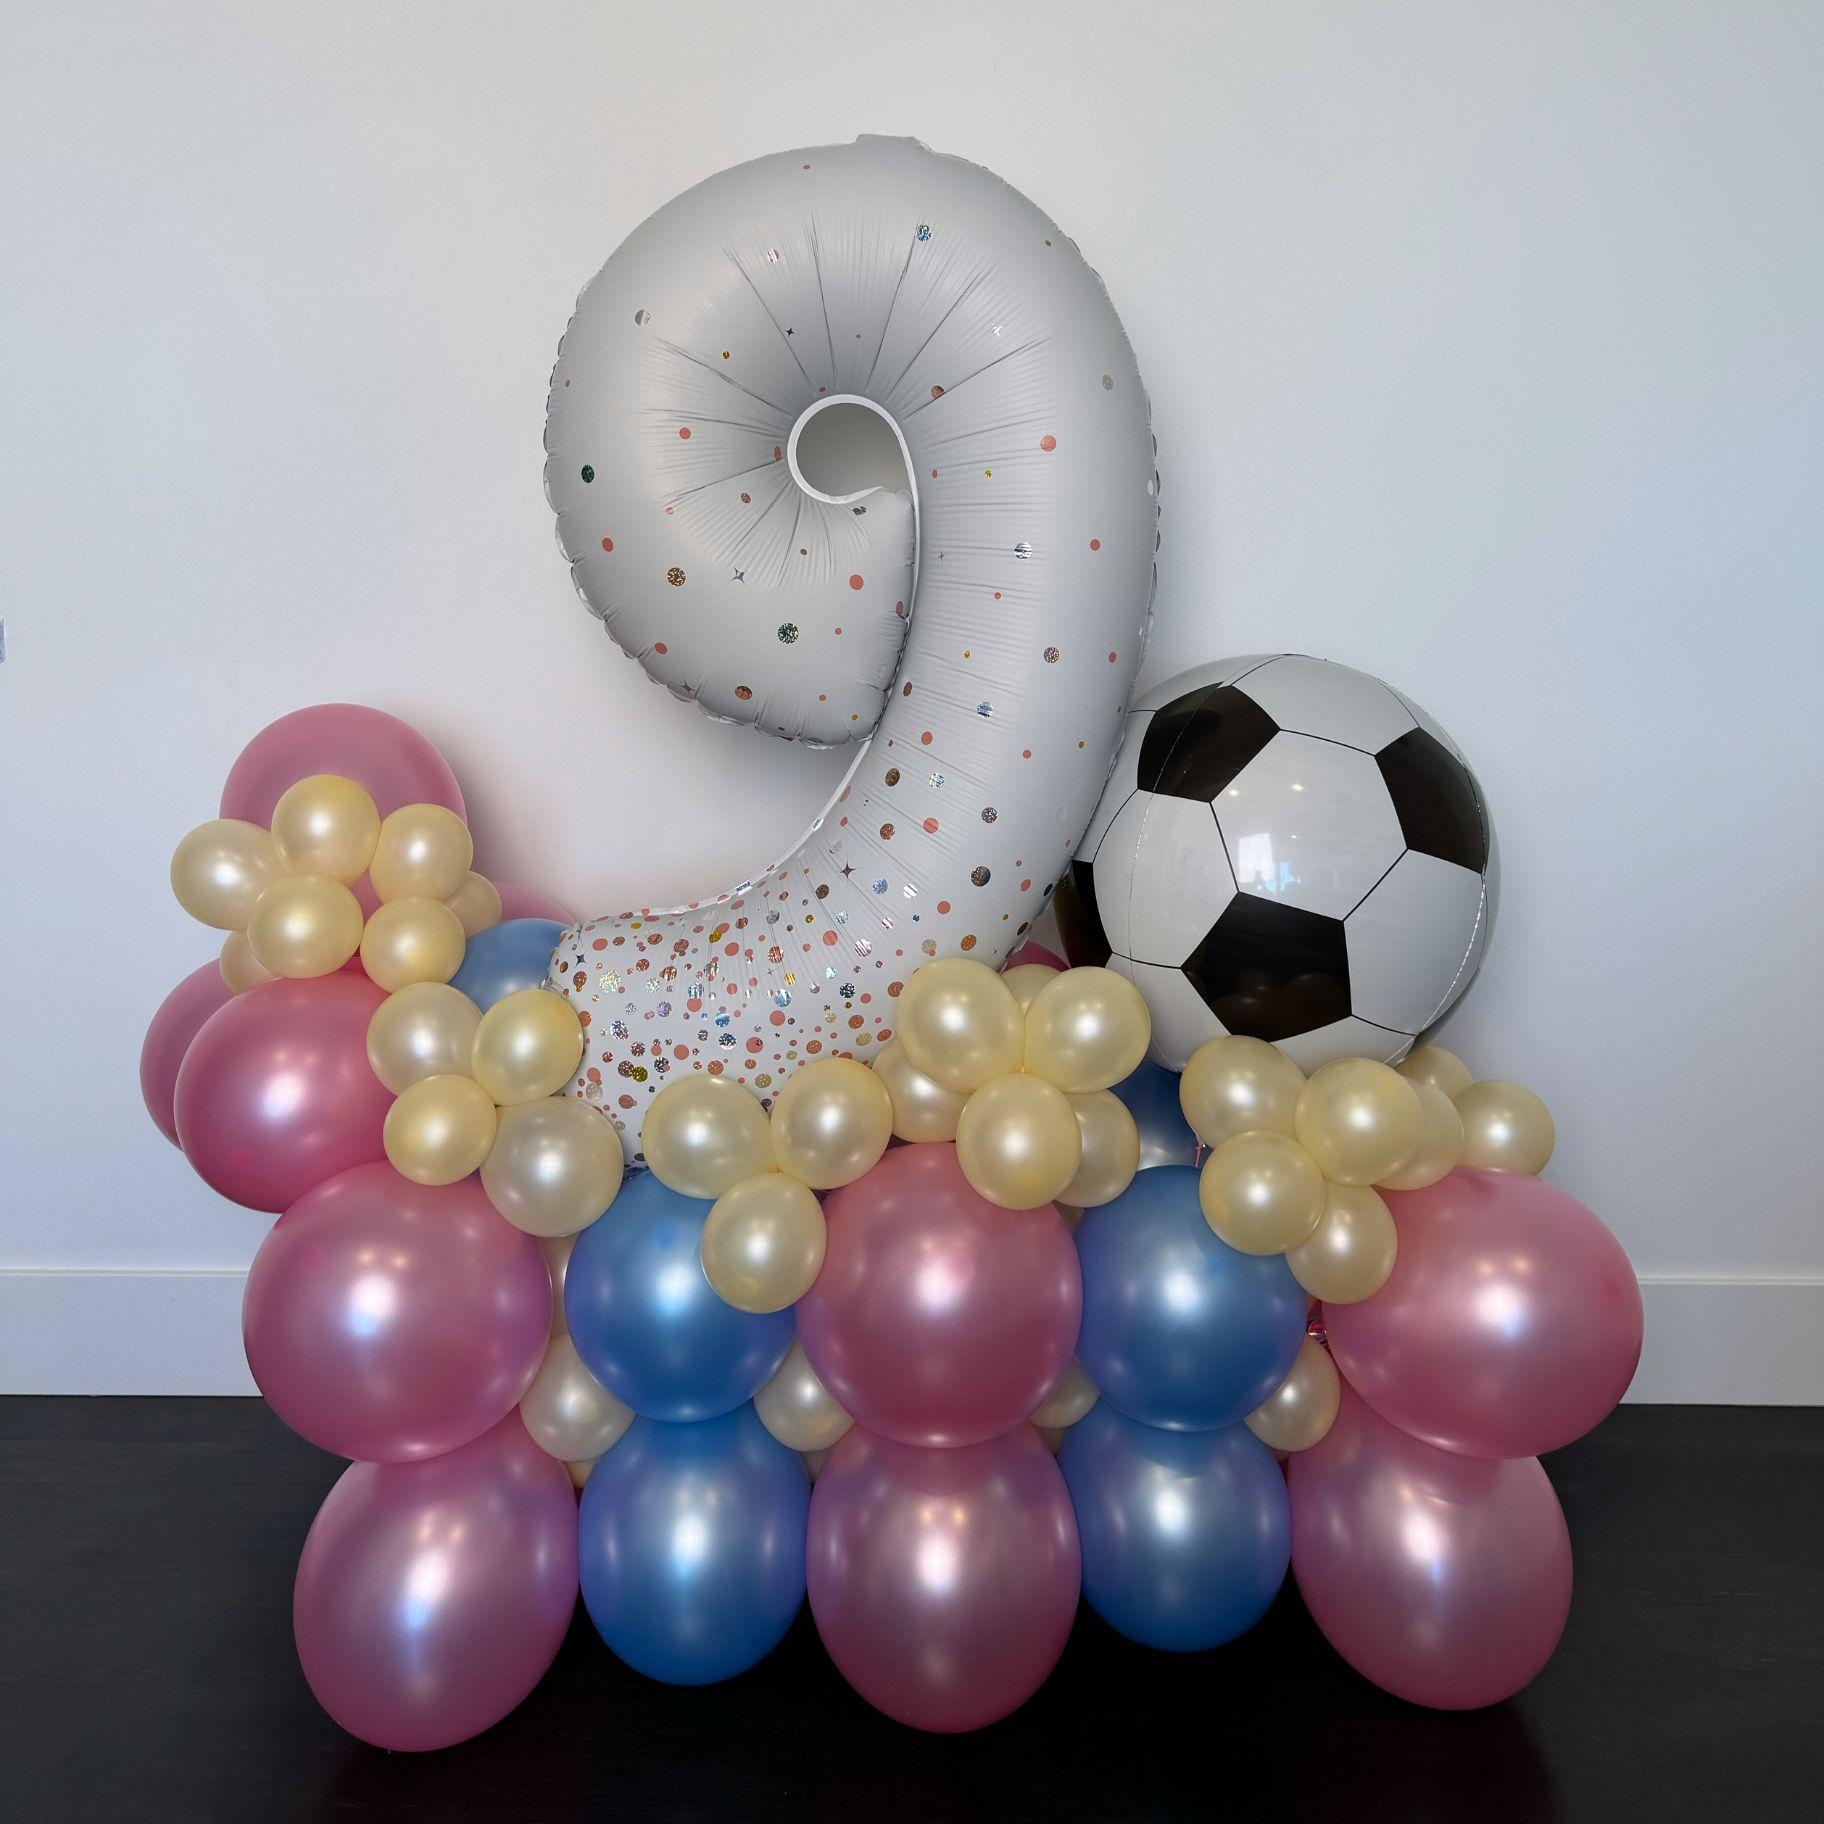 Get Air Birthday Balloons - bouquet